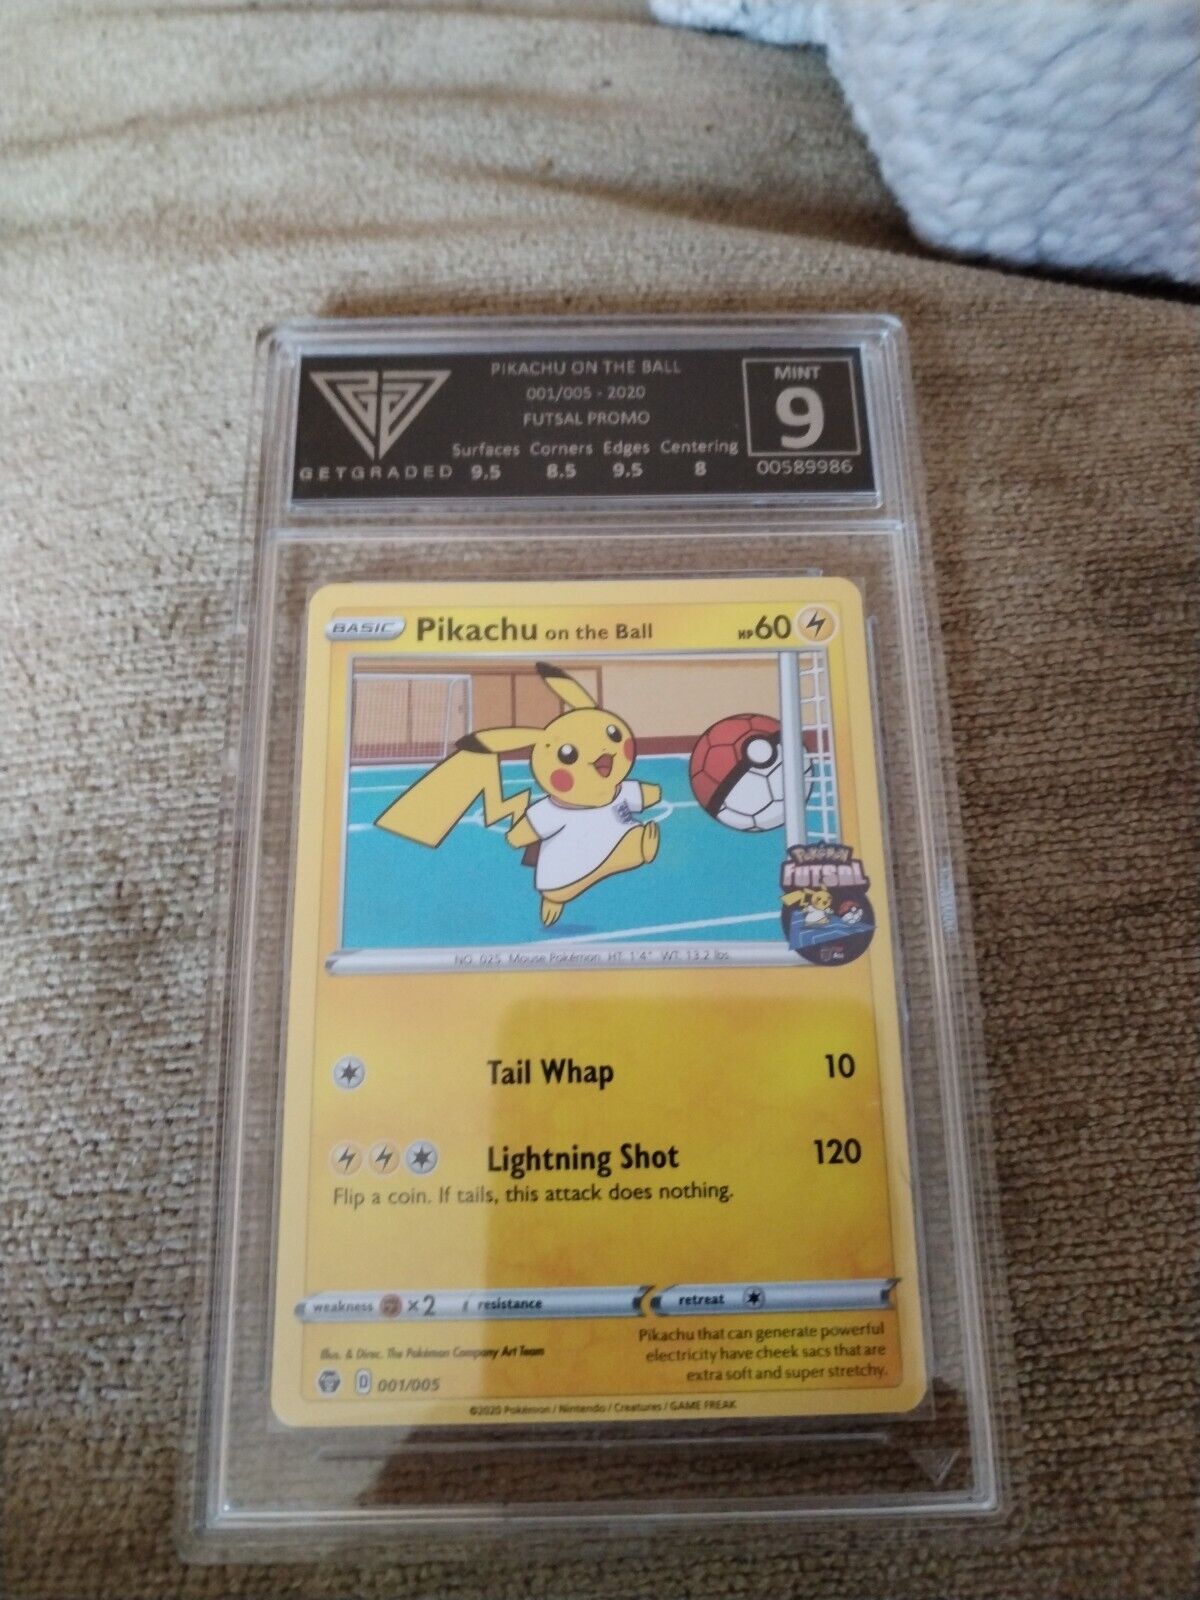 Pikachu on the Ball 001/005 Pokemon Card Getgraded 9